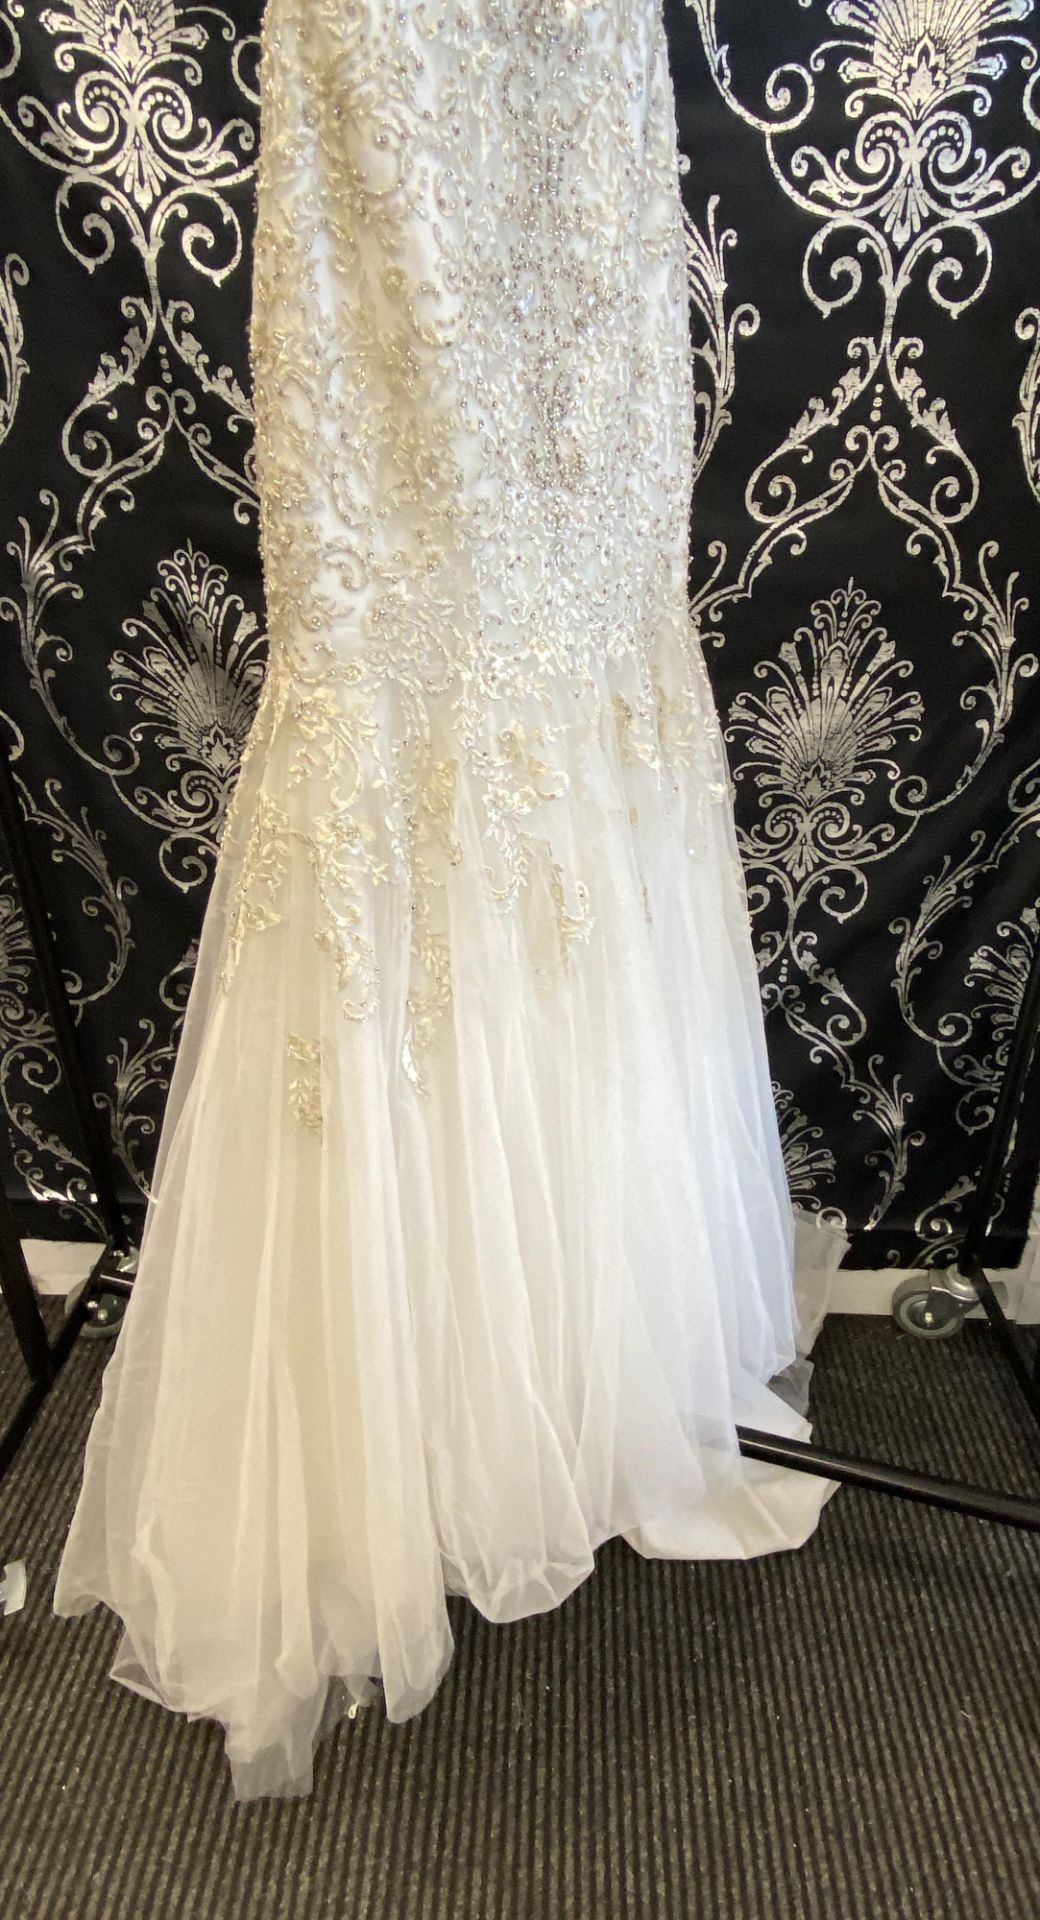 1 x ALLURE '9275' Timeless Strapless Lace And Chiffon Mermaid Designer Wedding Dress RRP £2,250 UK12 - Image 7 of 11